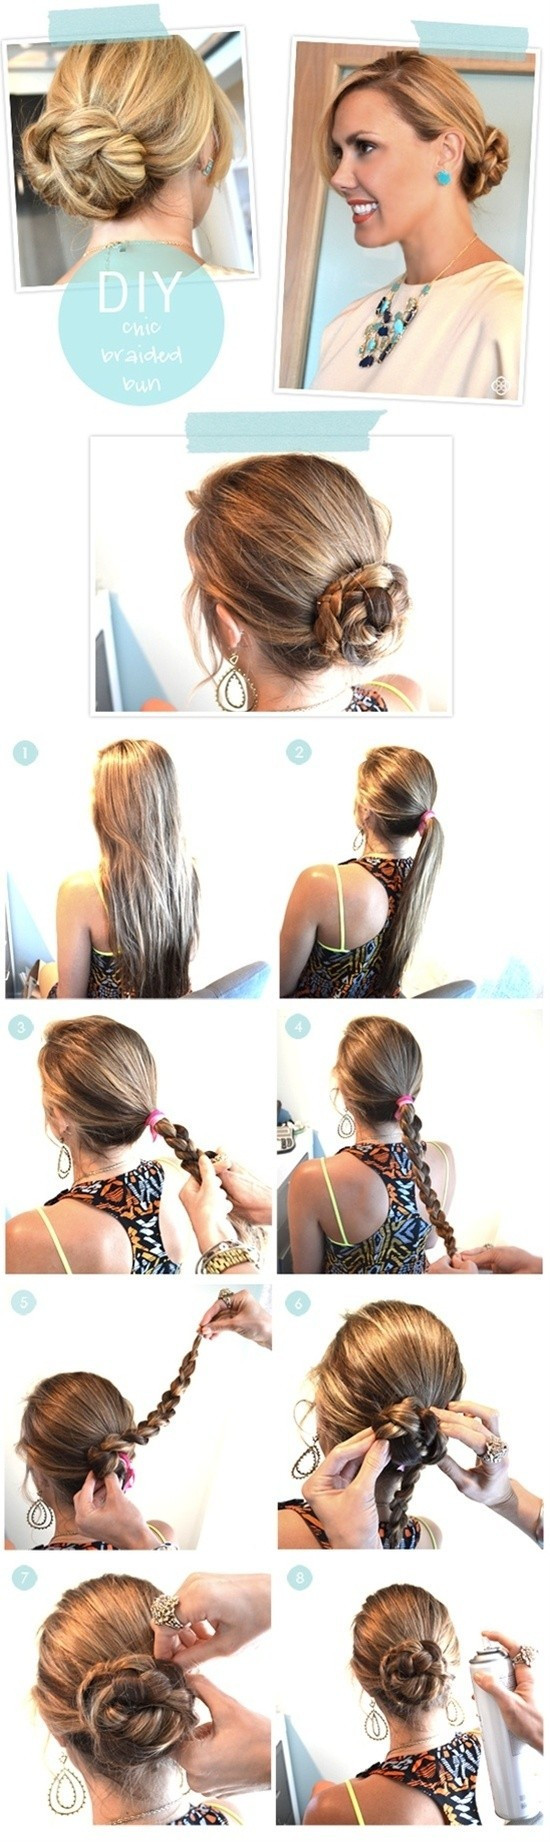 DIY Long Hair Updo
 10 Easy Hairstyle Tutorials For Long Hair London Beep